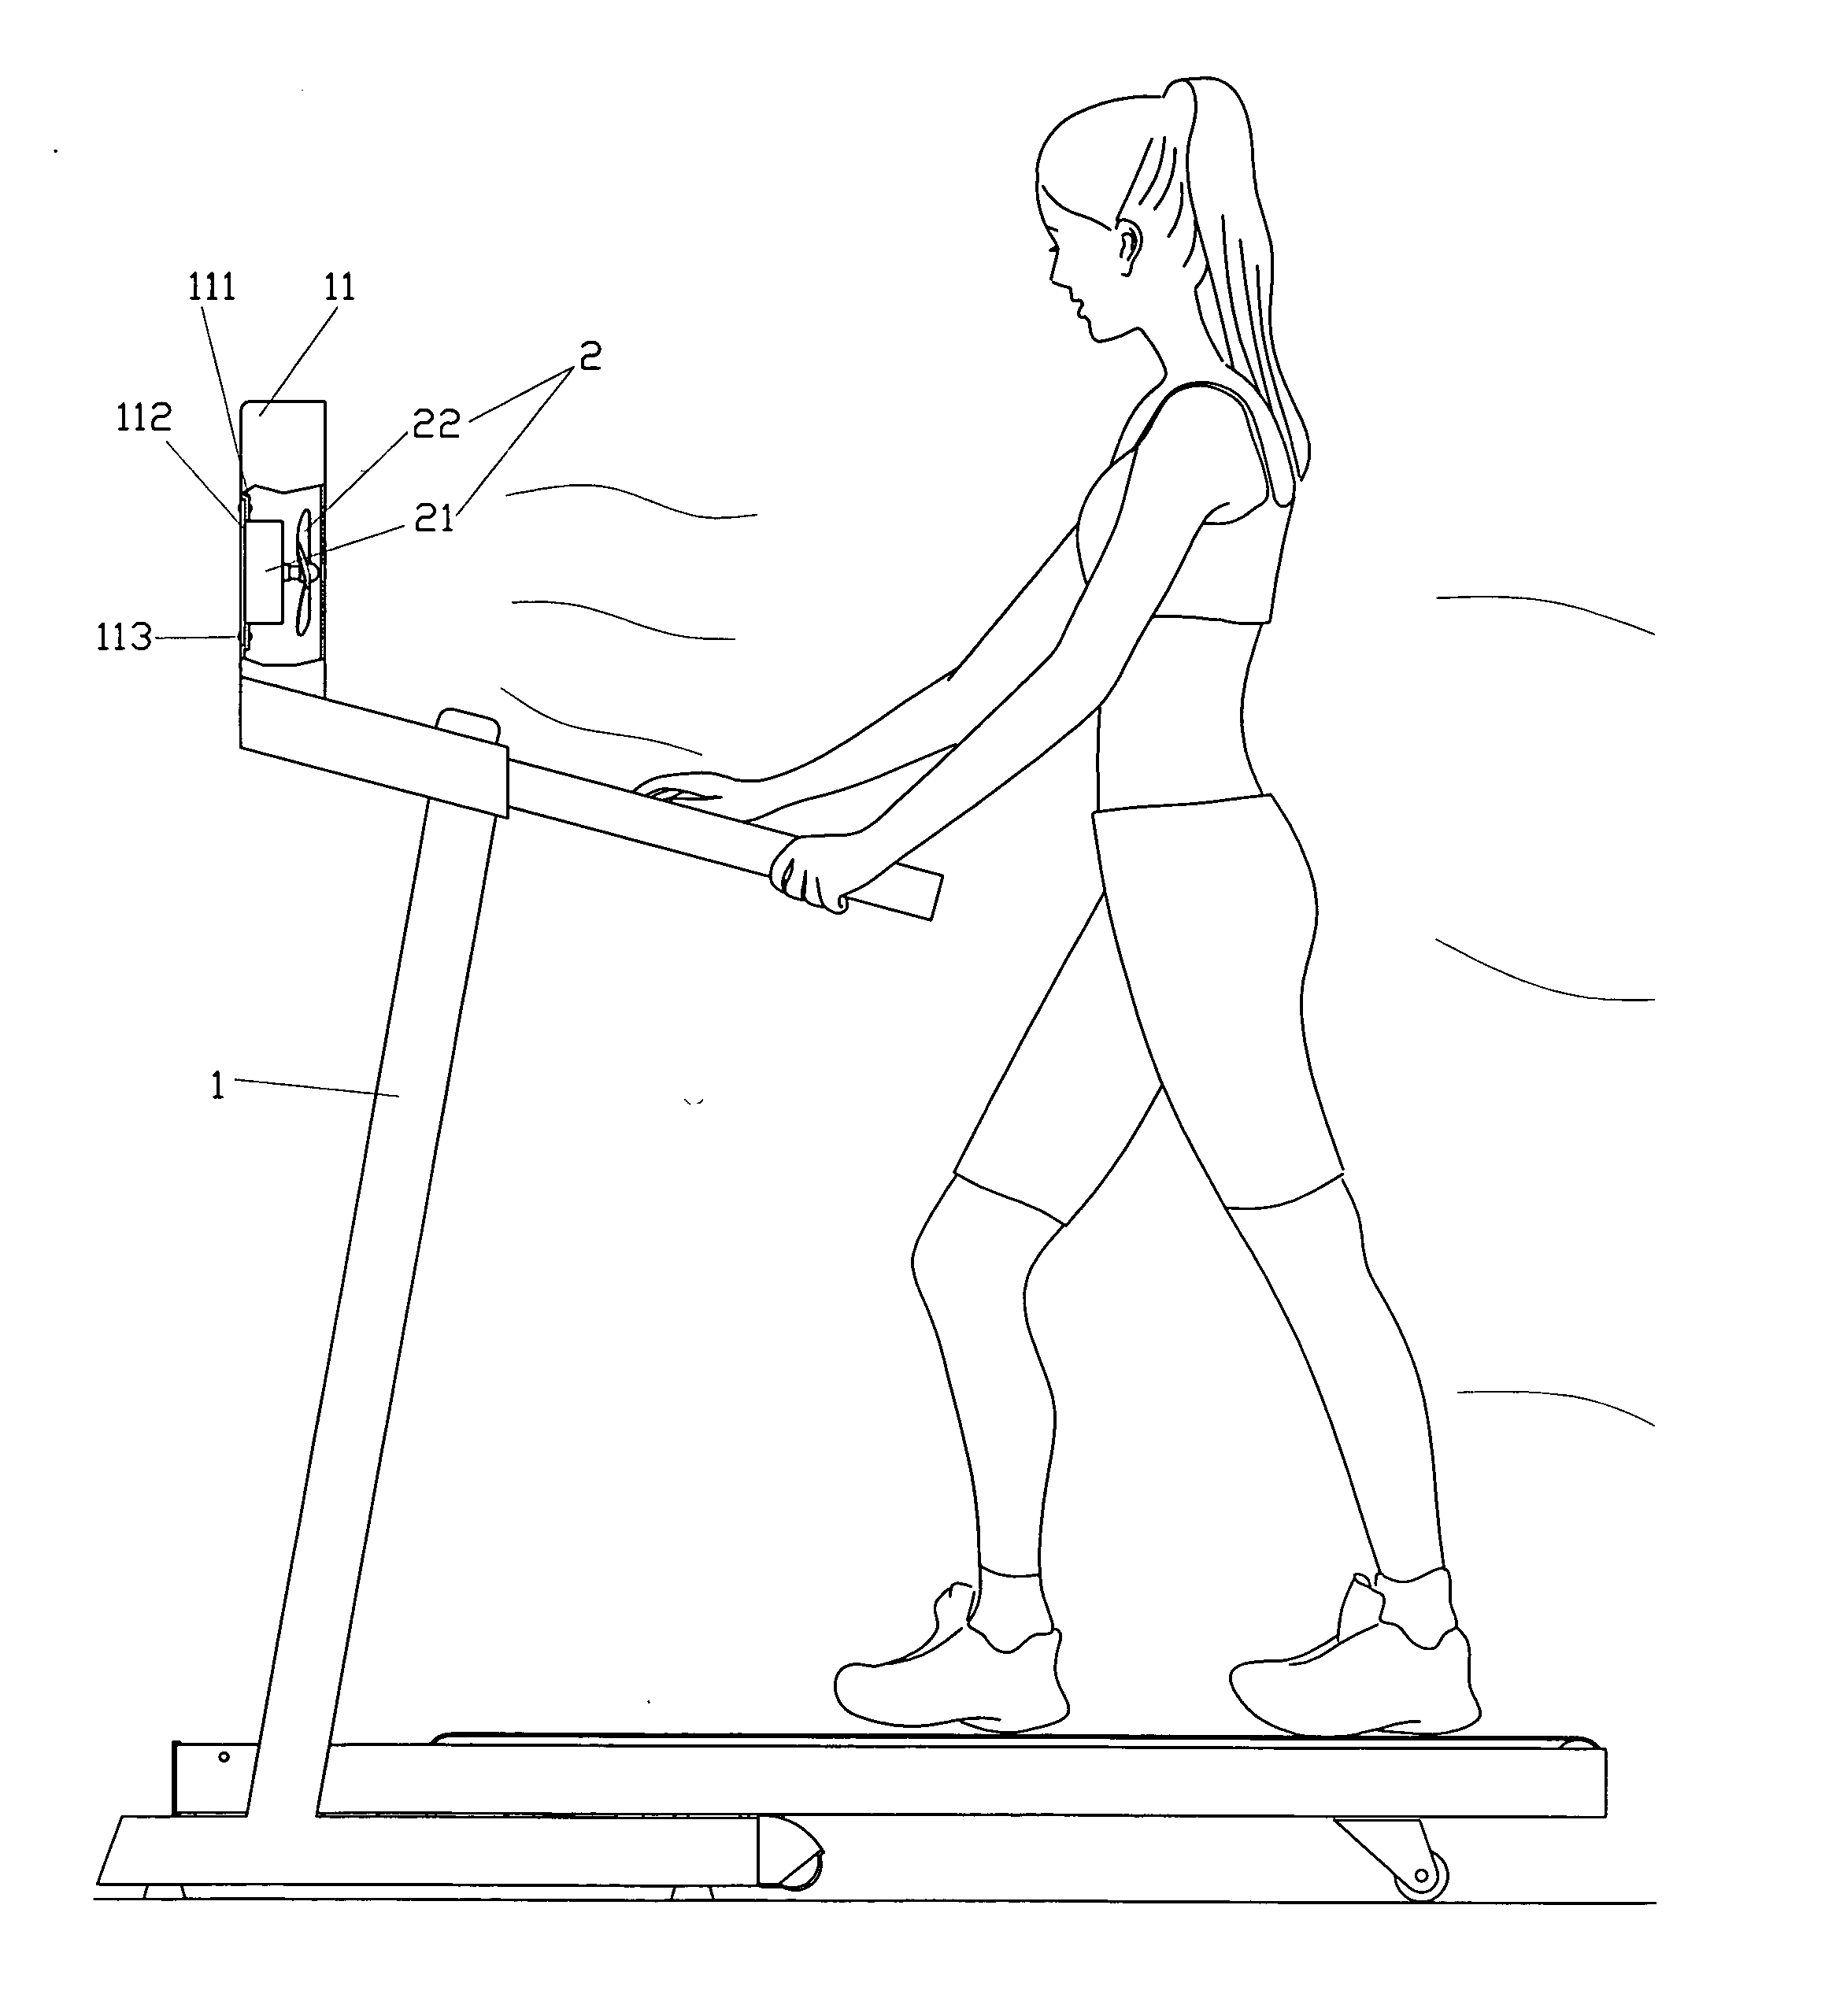 Static eliminator for a motorized treadmill